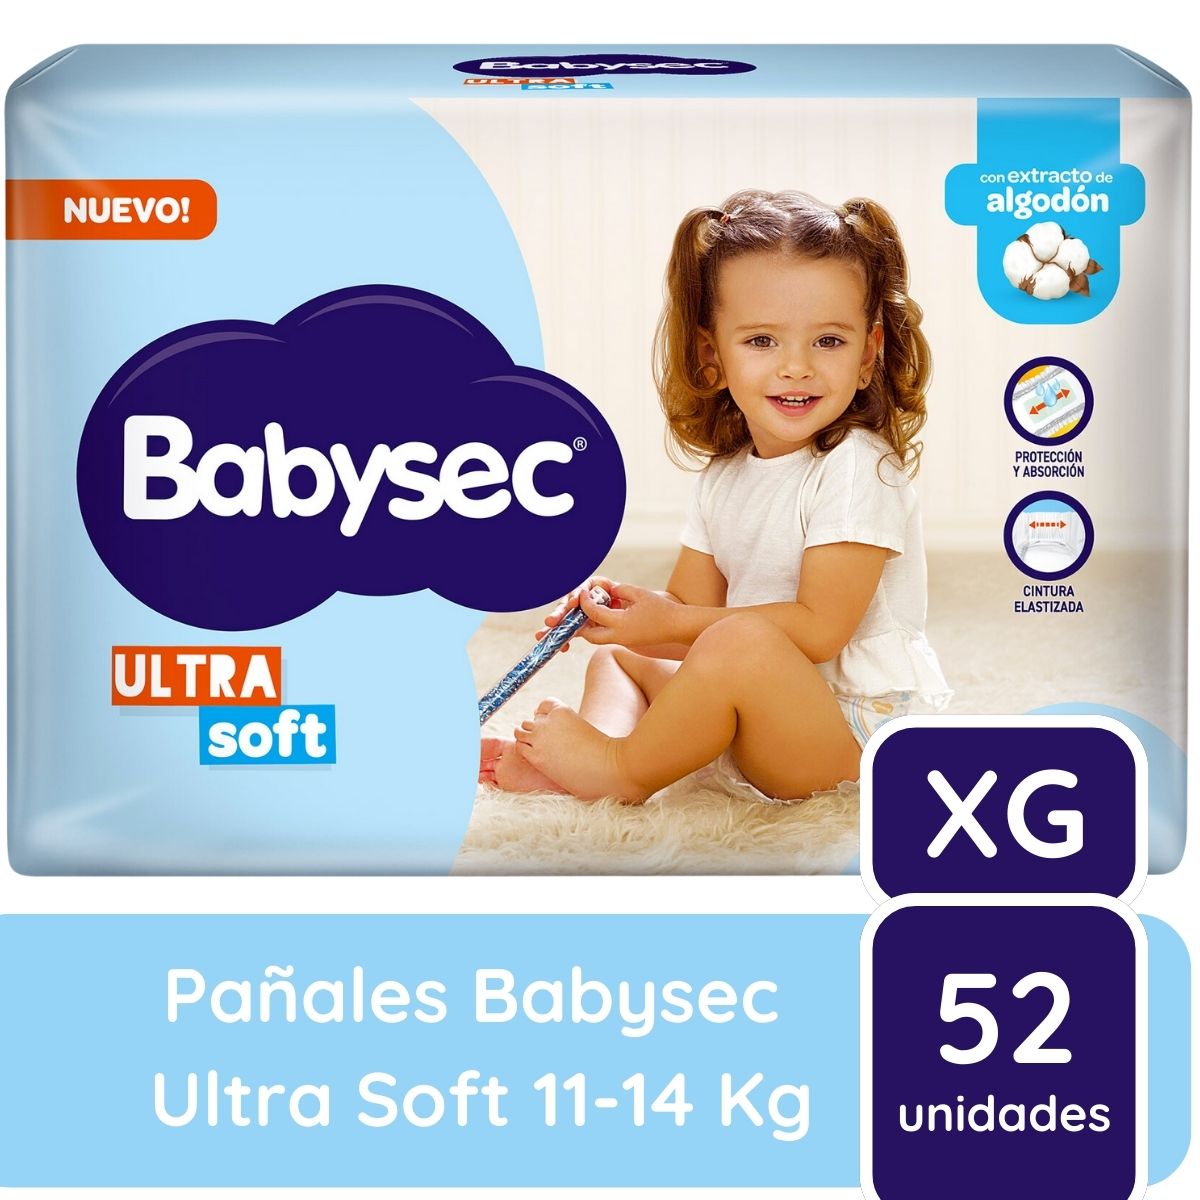 Miniatura 1 de 2 de Pañales Babysec Ultra Soft Talle XG x52 unidades 11 a 14 kilos